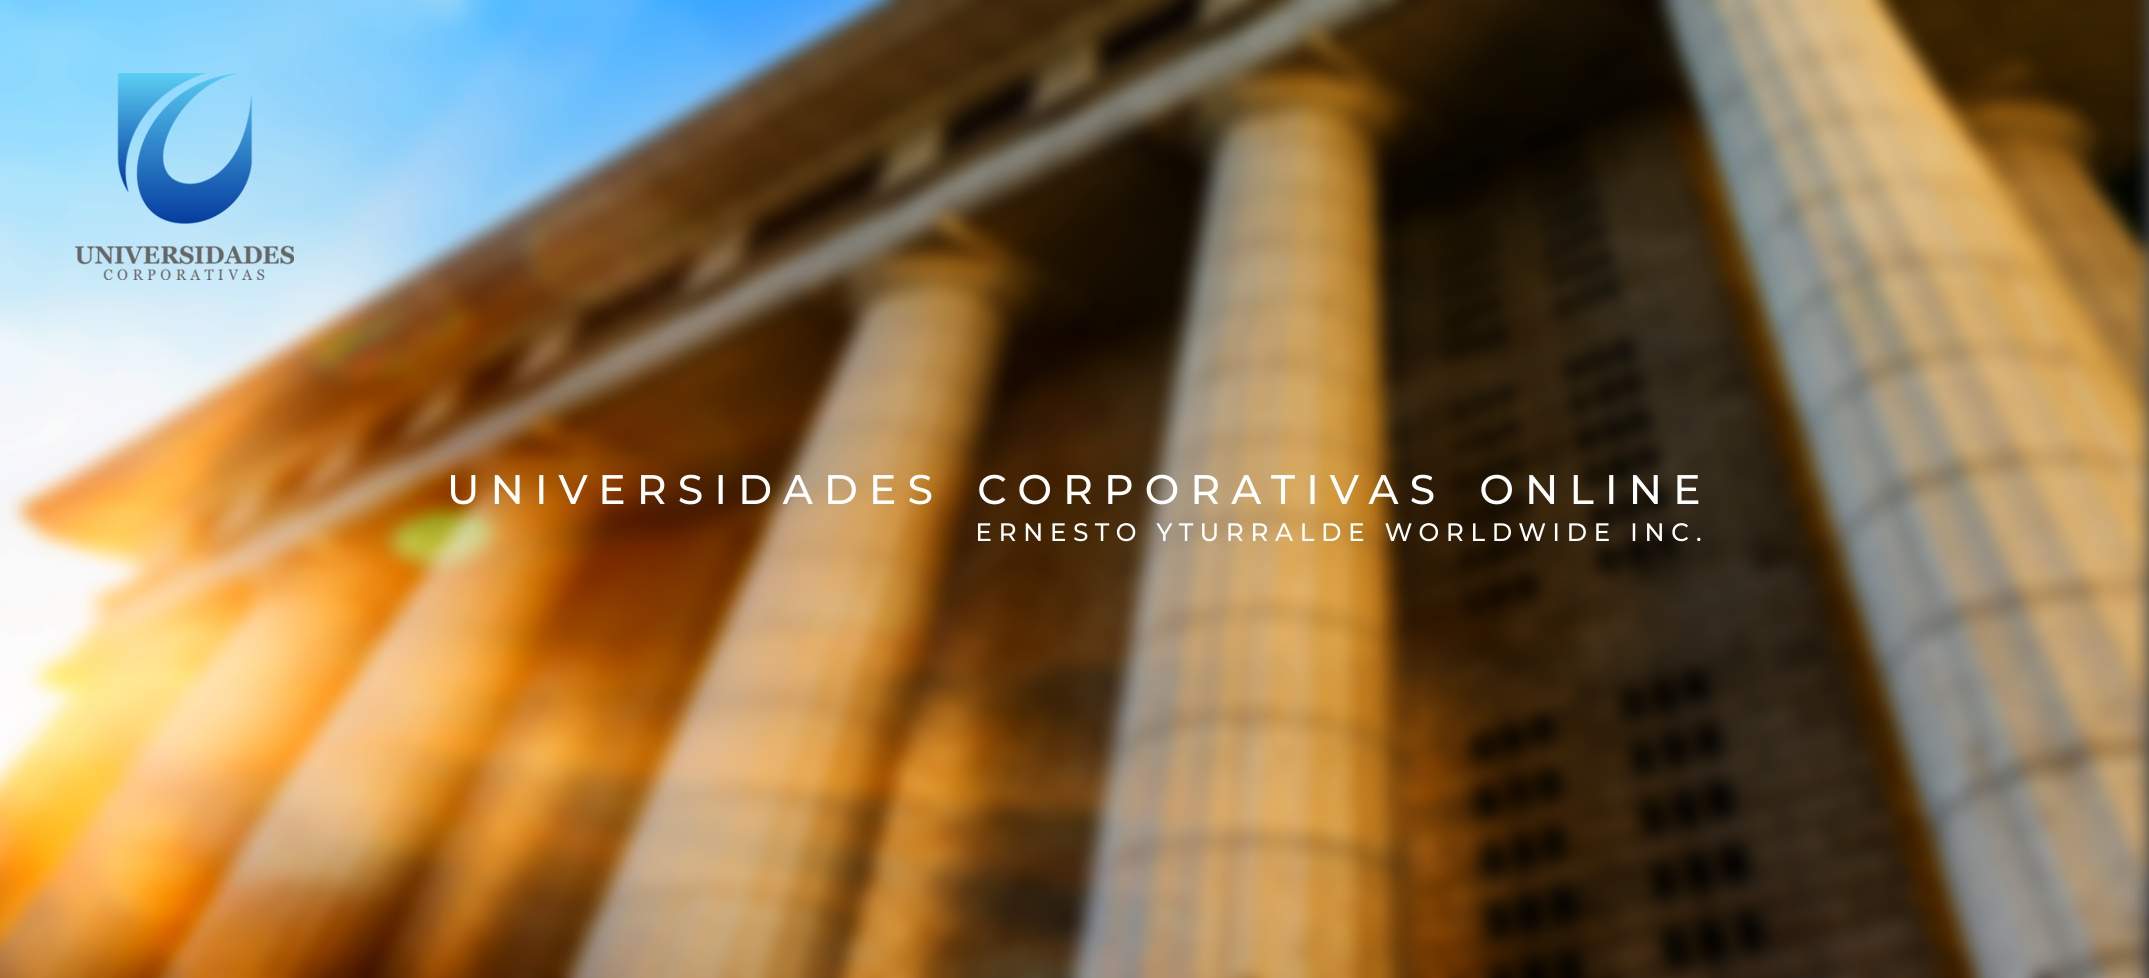 UC | Universidades Corporativas Online